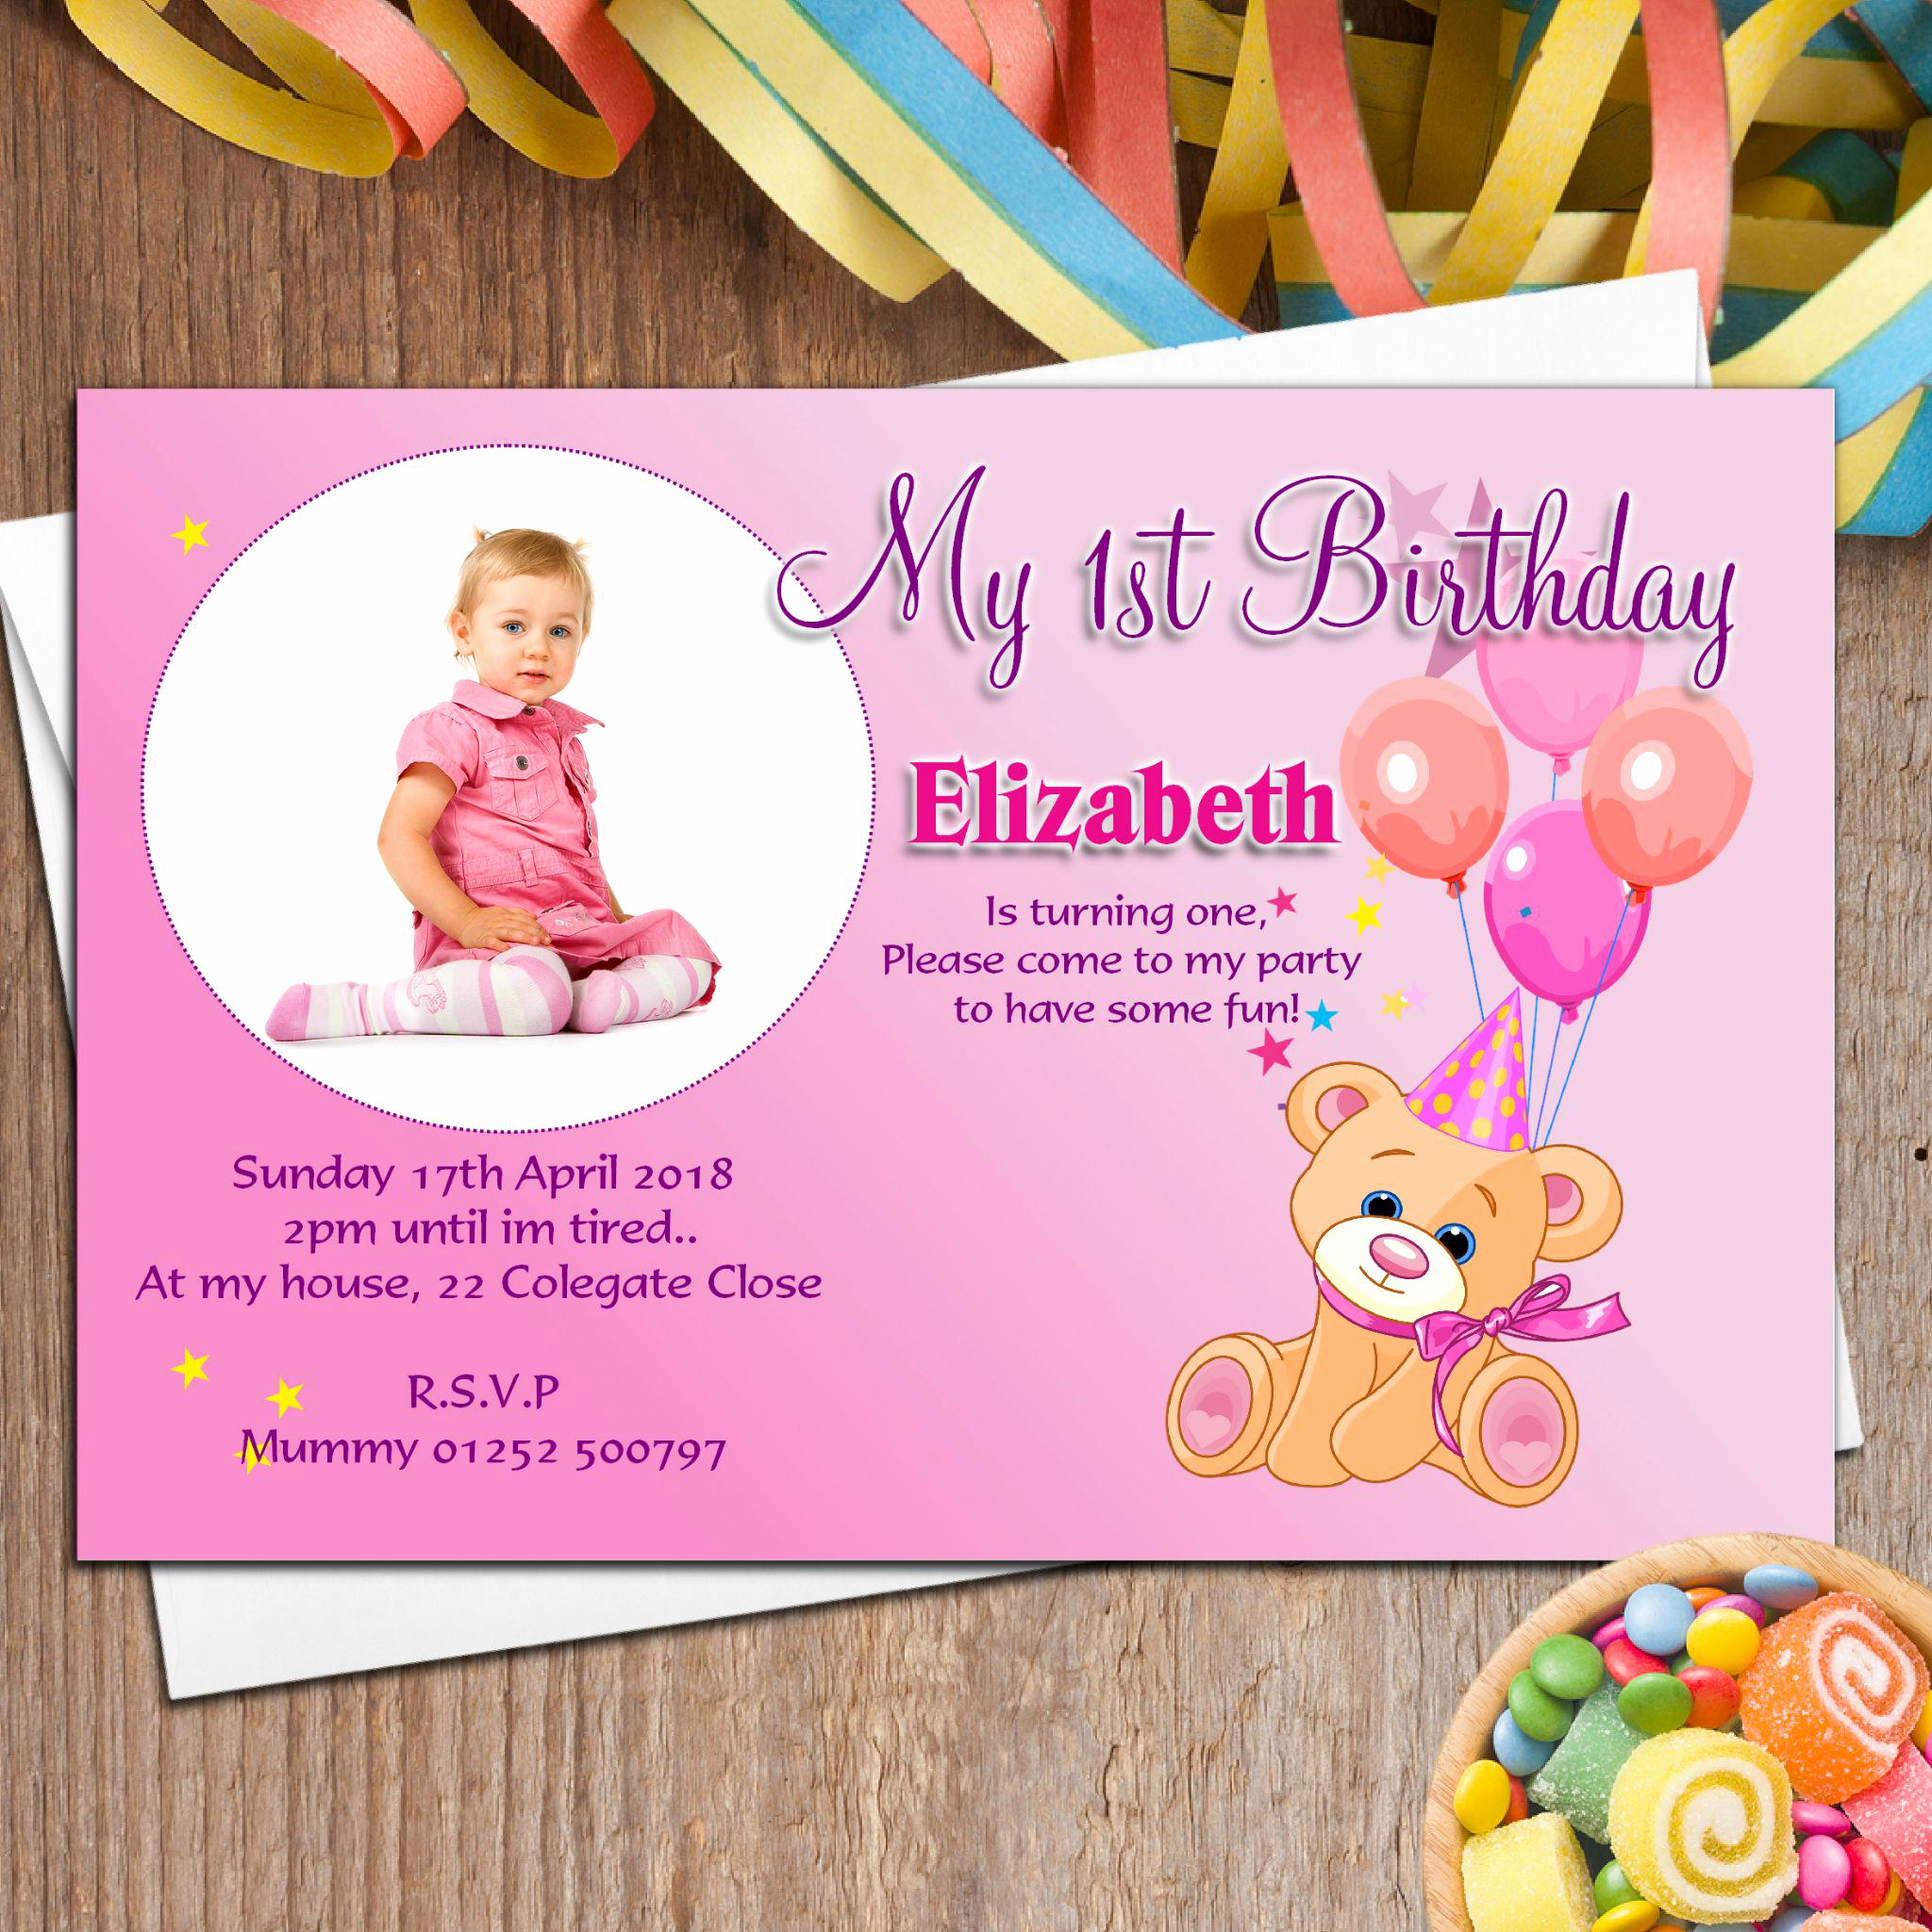 Birthday Invitation Card Template Inspirational 20 Birthday Invitations Cards – Sample Wording Printable